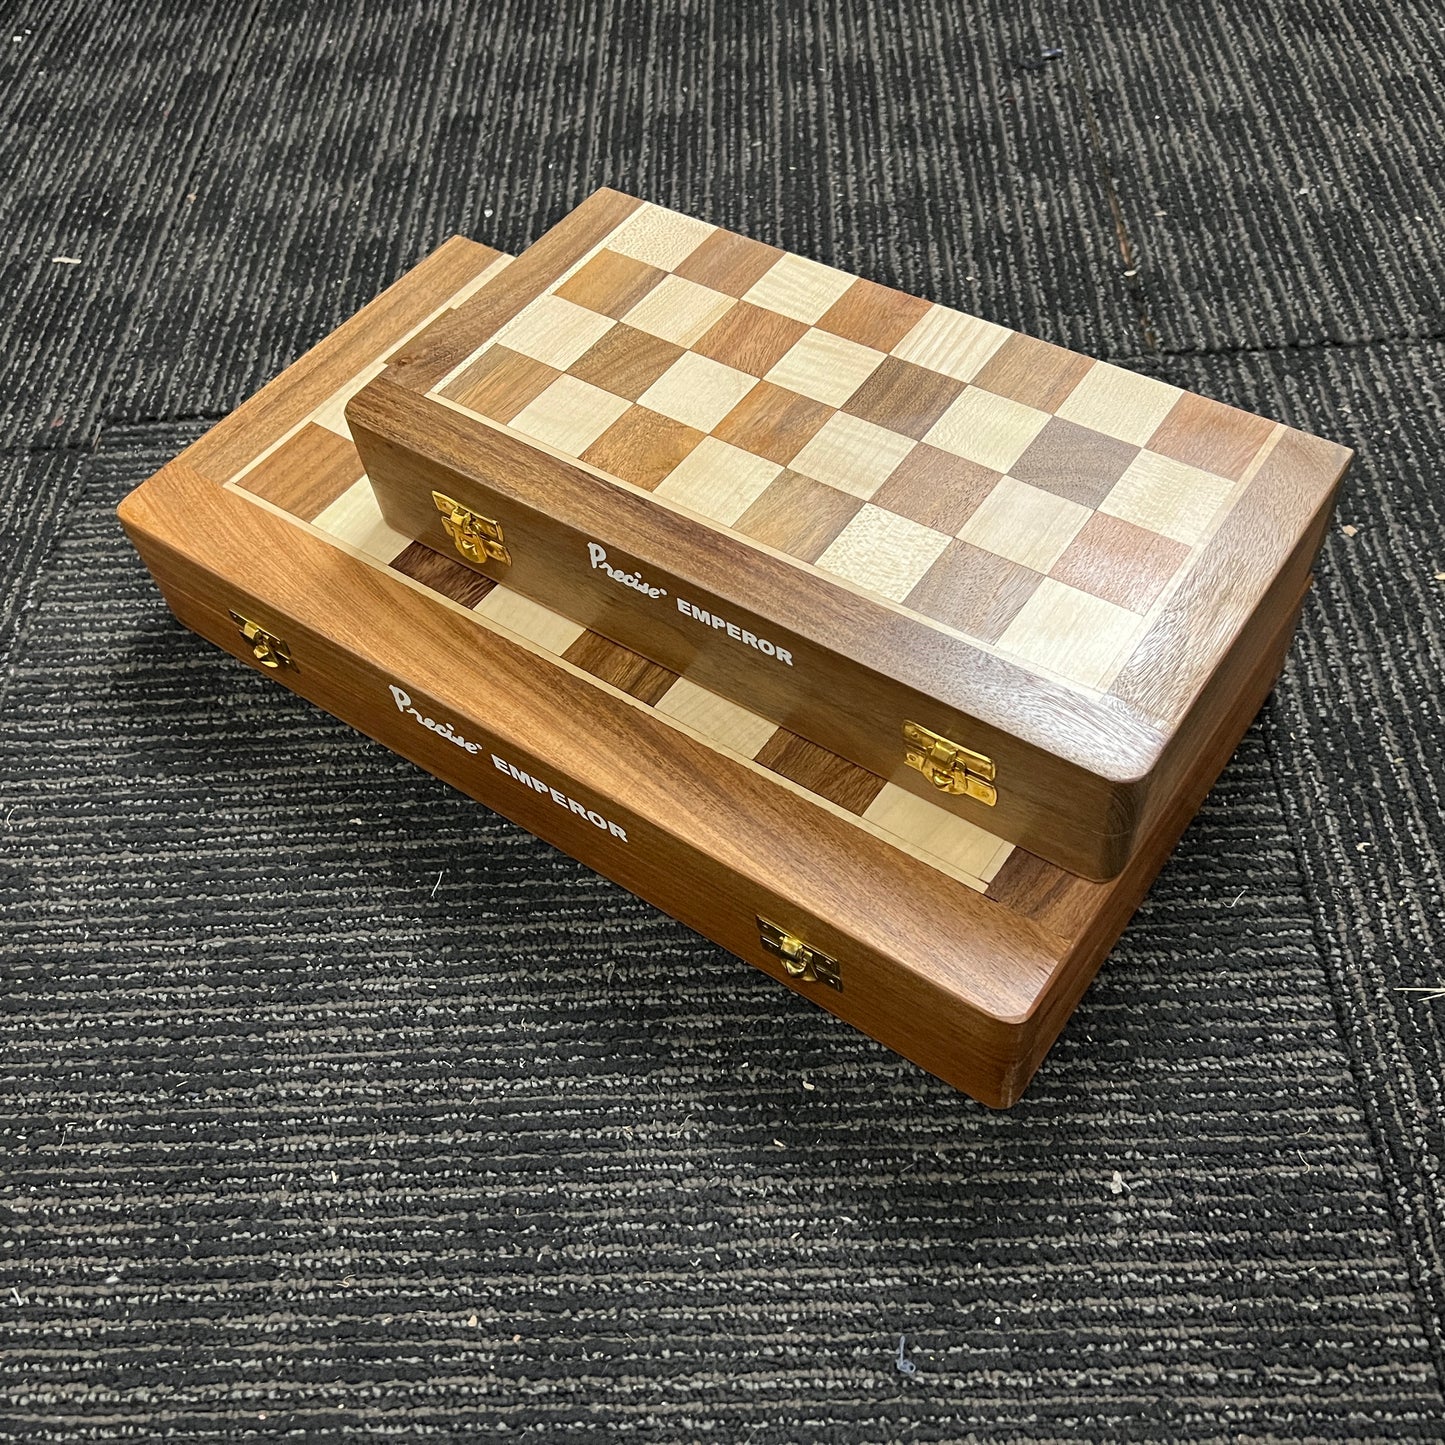 Precise Emperor series chess board set (16 Inches X 16 inches)